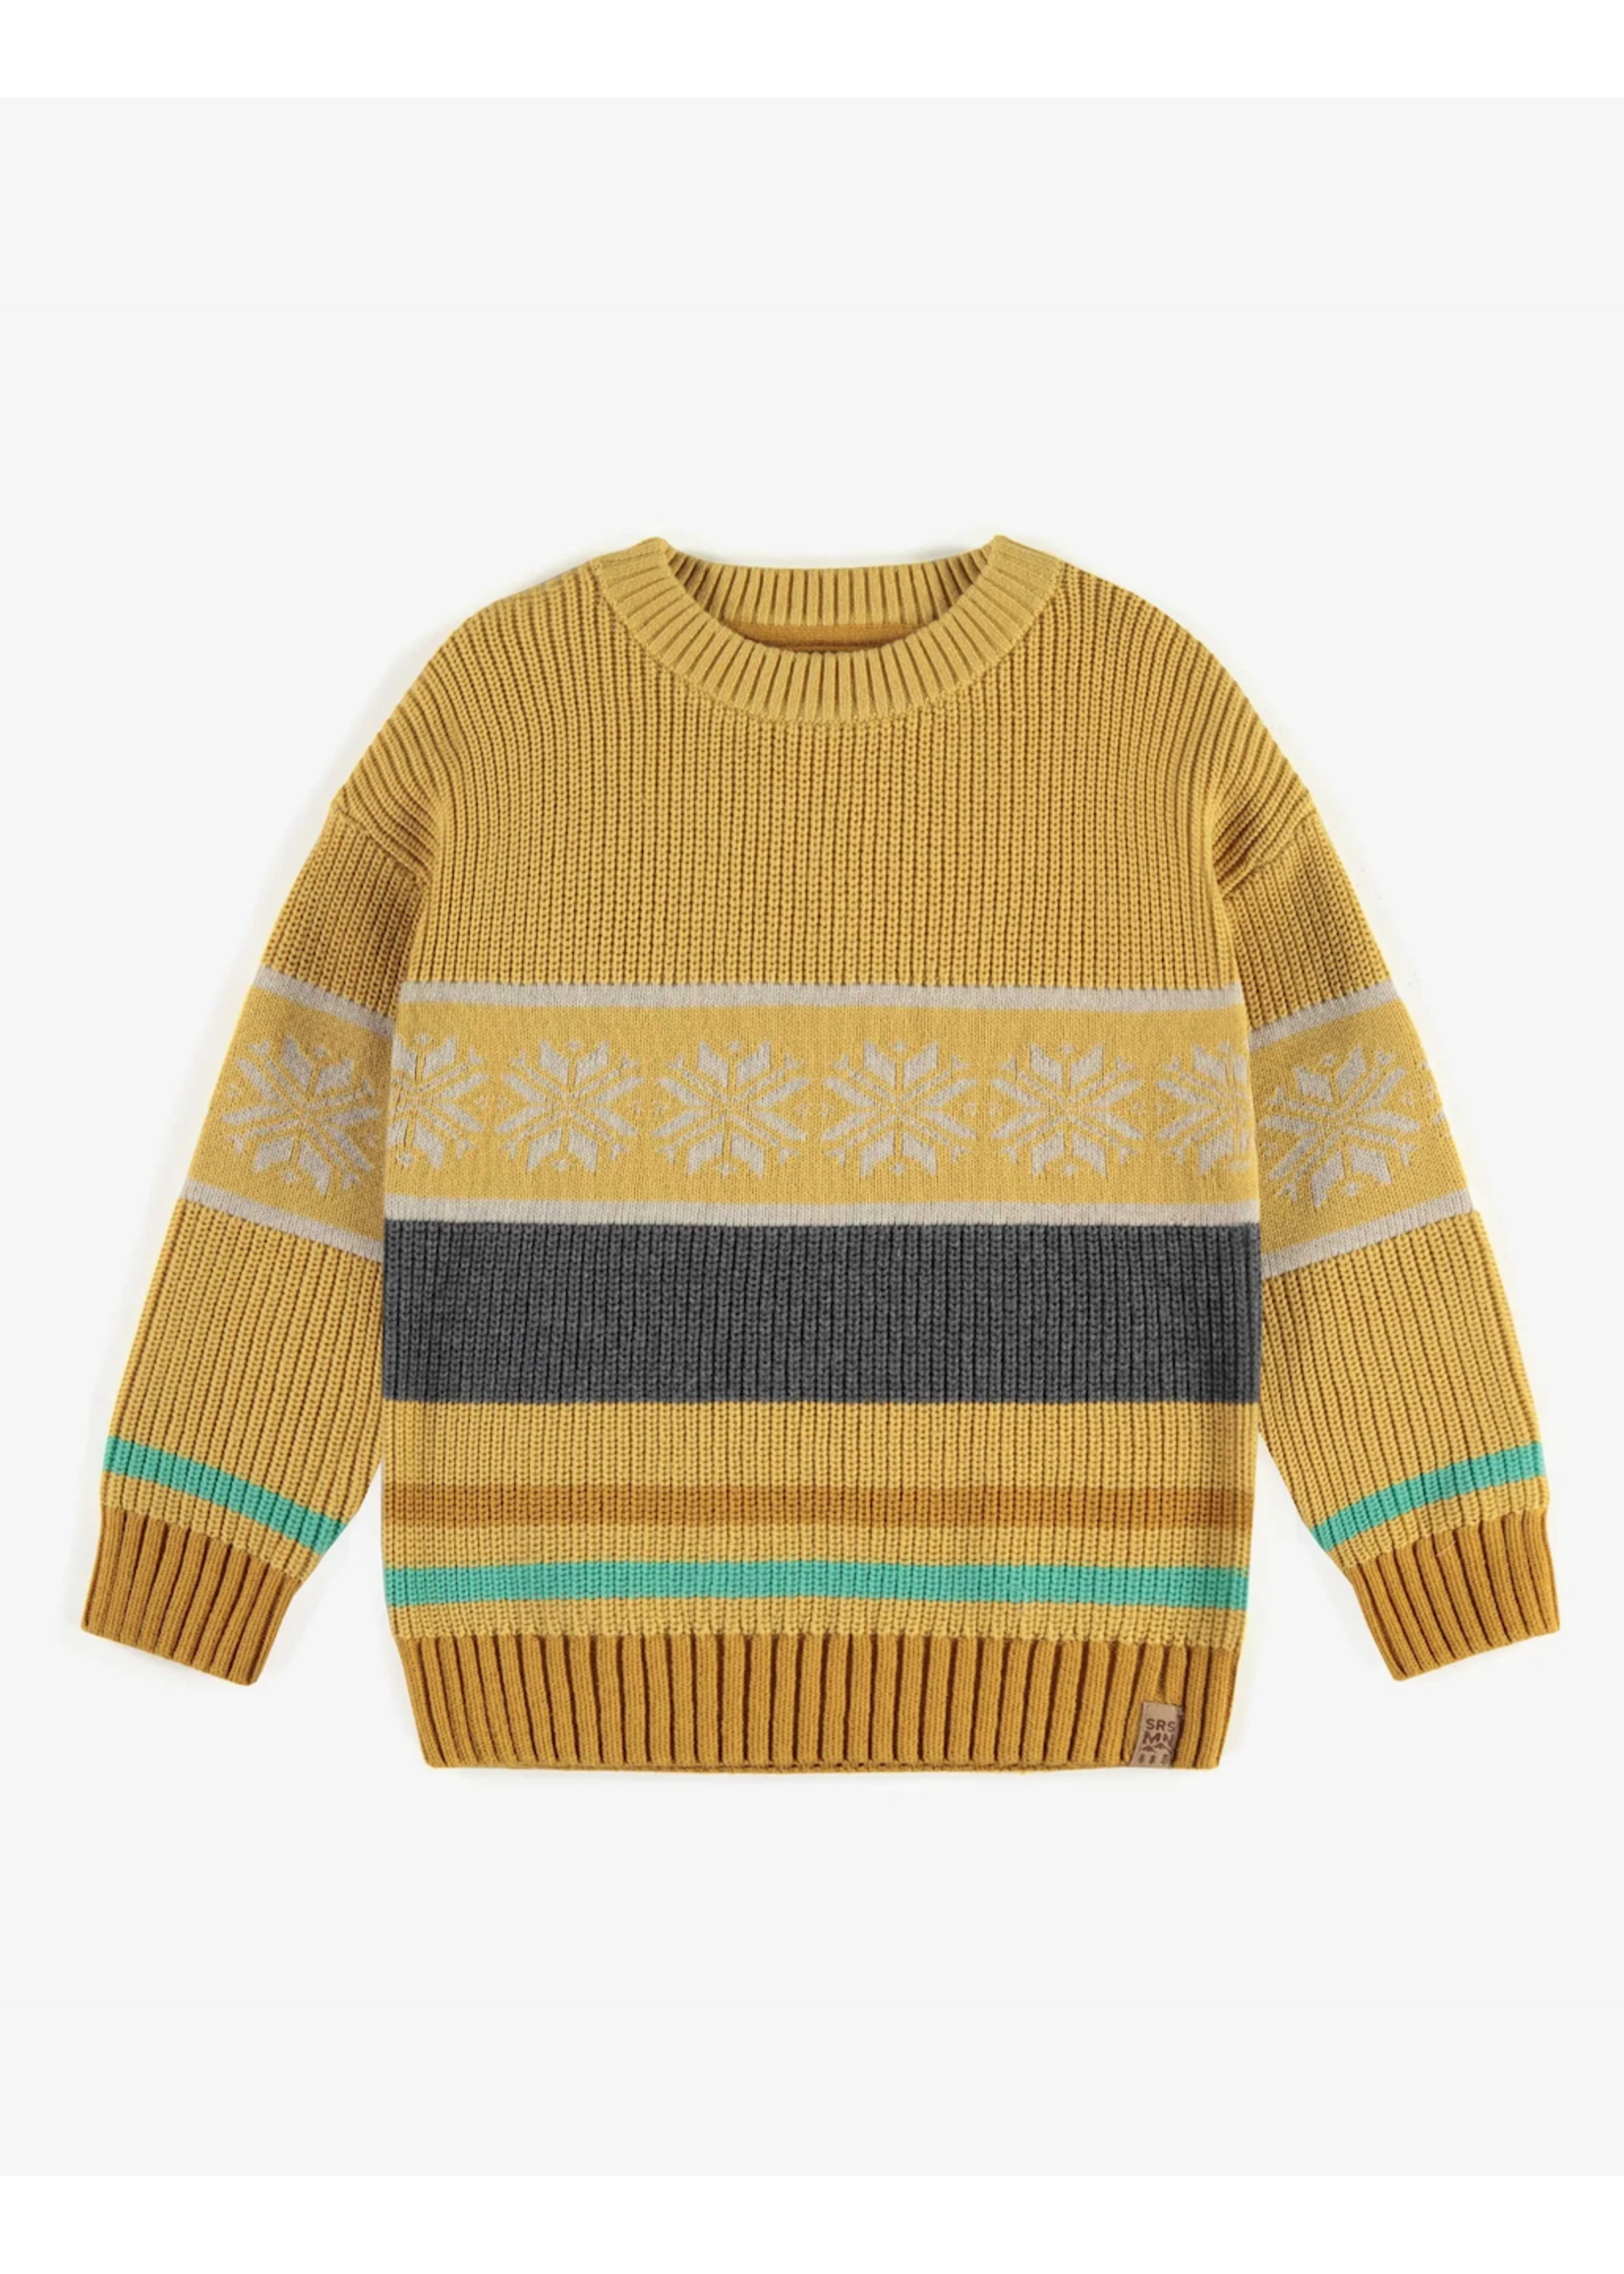 Souris Mini Souris Mini, Winter Patterend Sweater || Yellow, Cream, Grey and Green